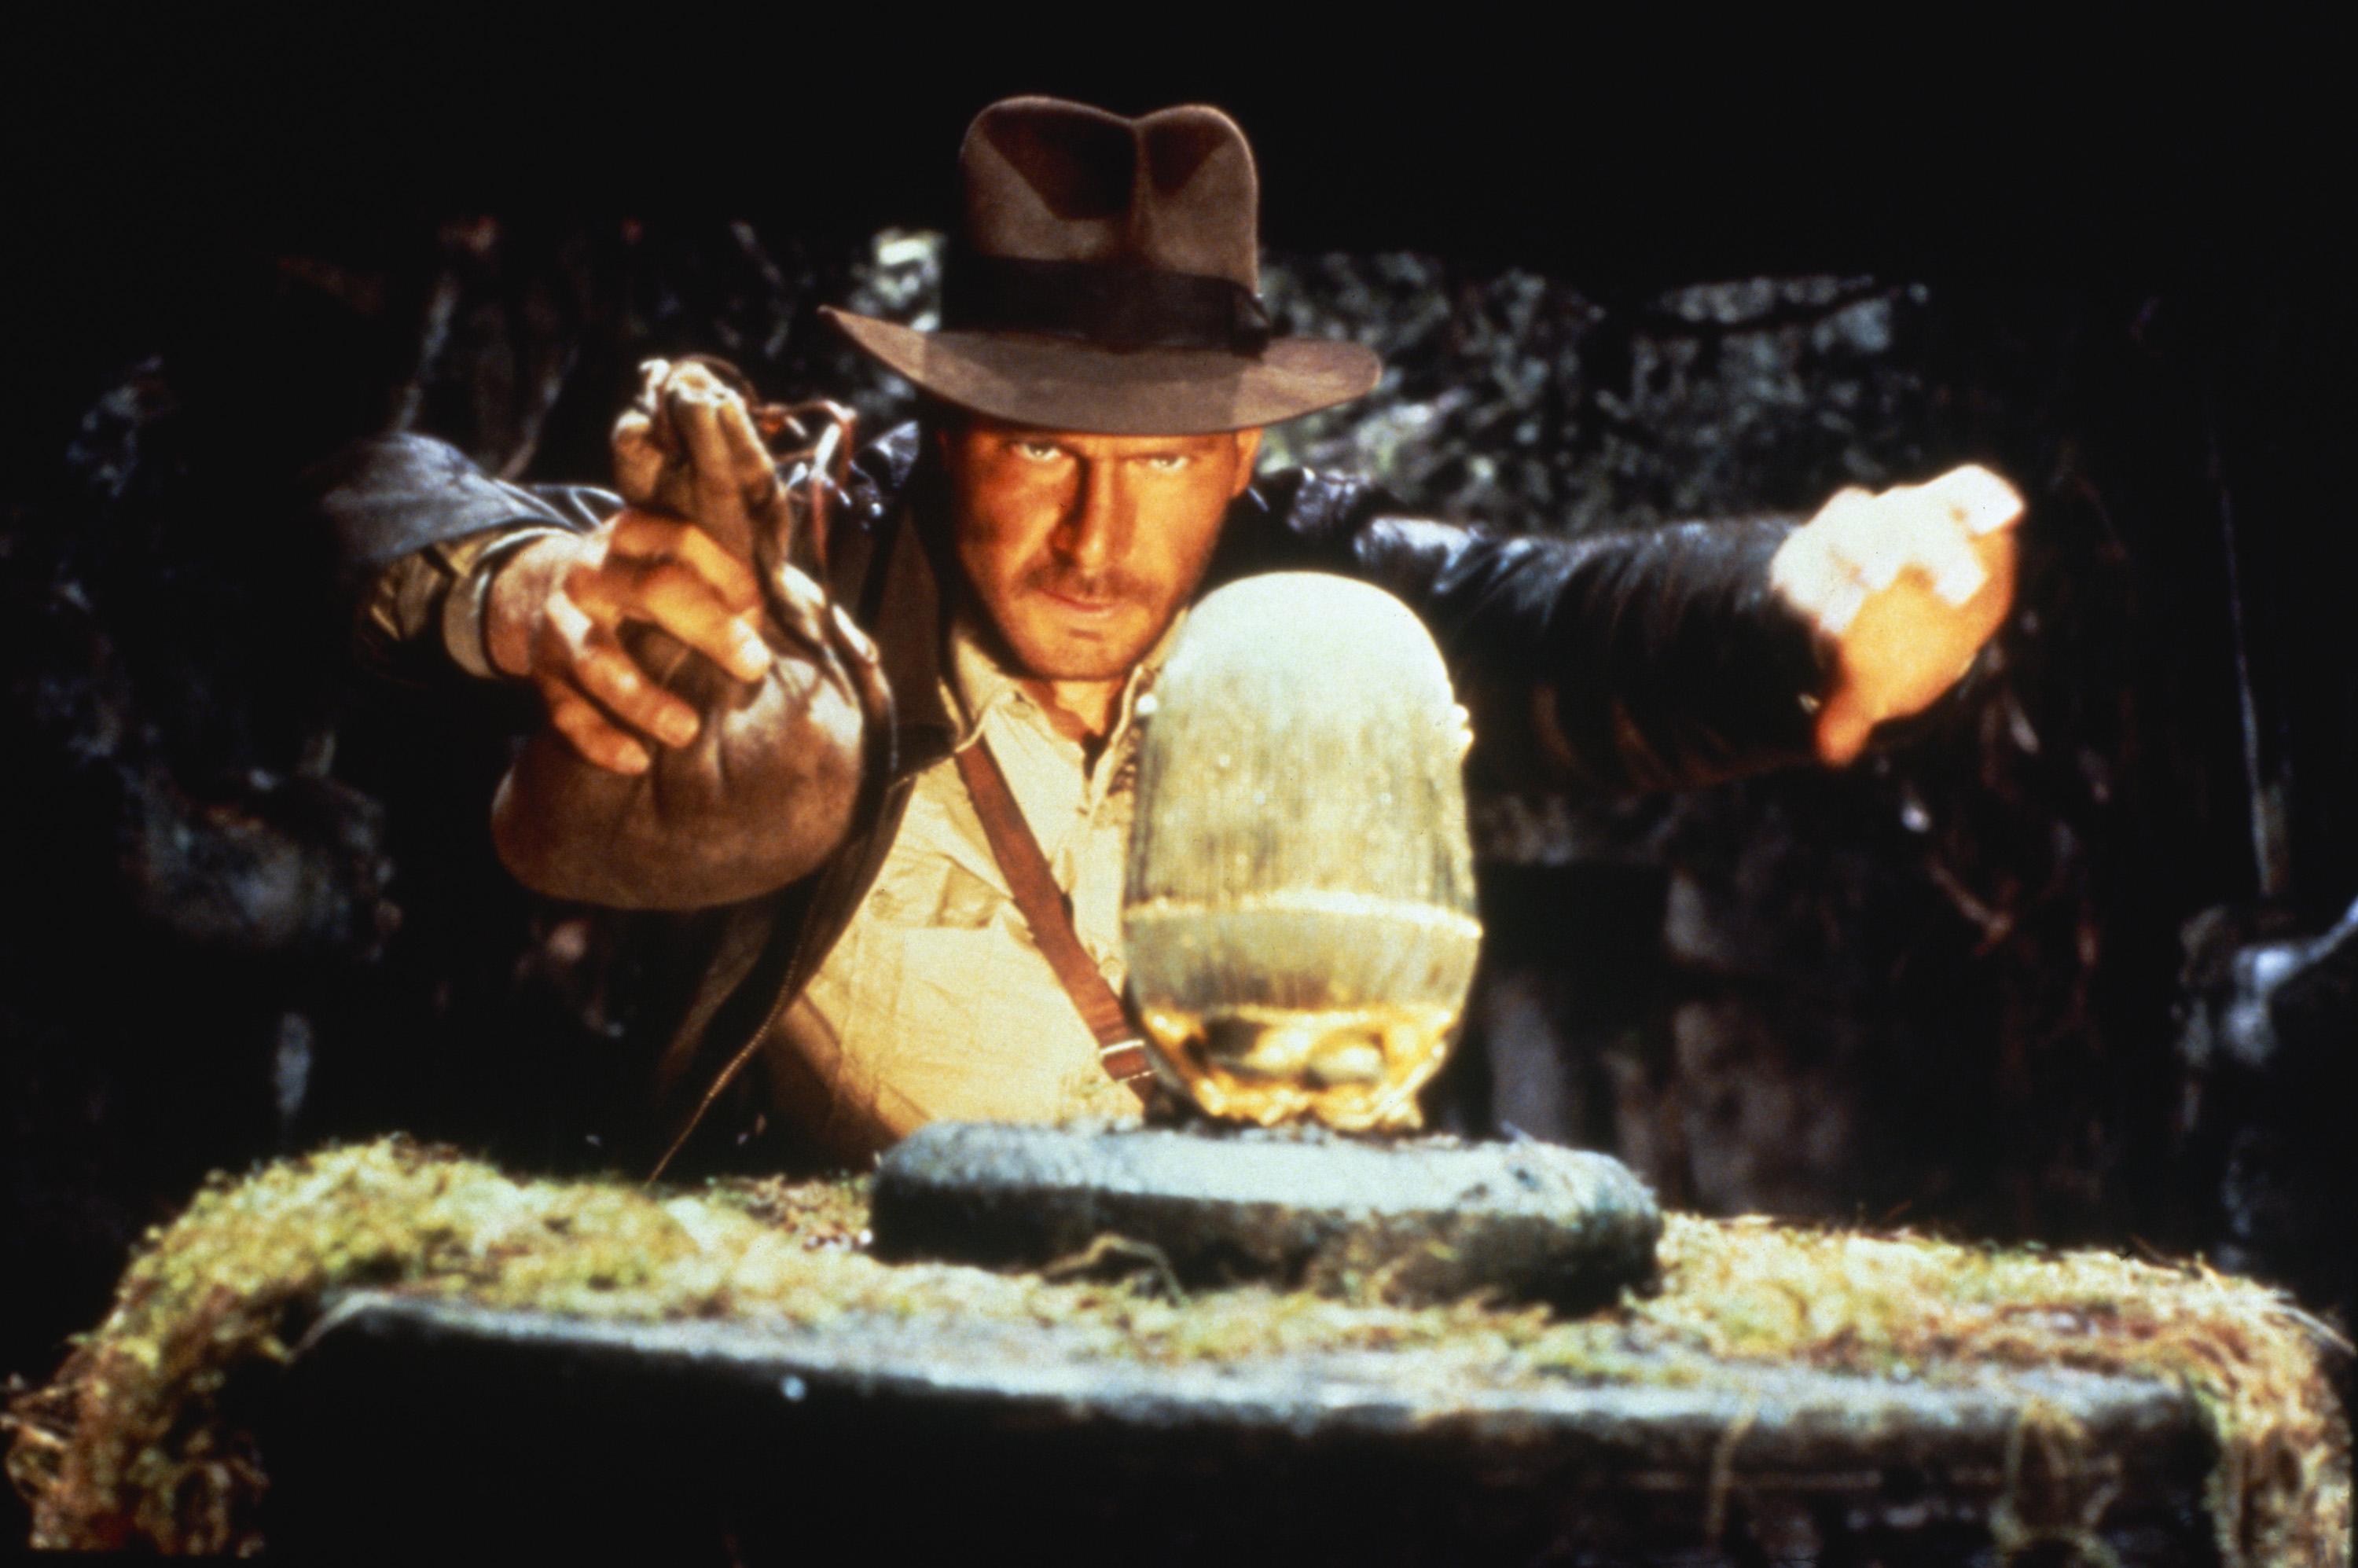 Indiana Jones 4-Movie Collection [4K Ultra HD + Blu-ray + Digital]  32429355546